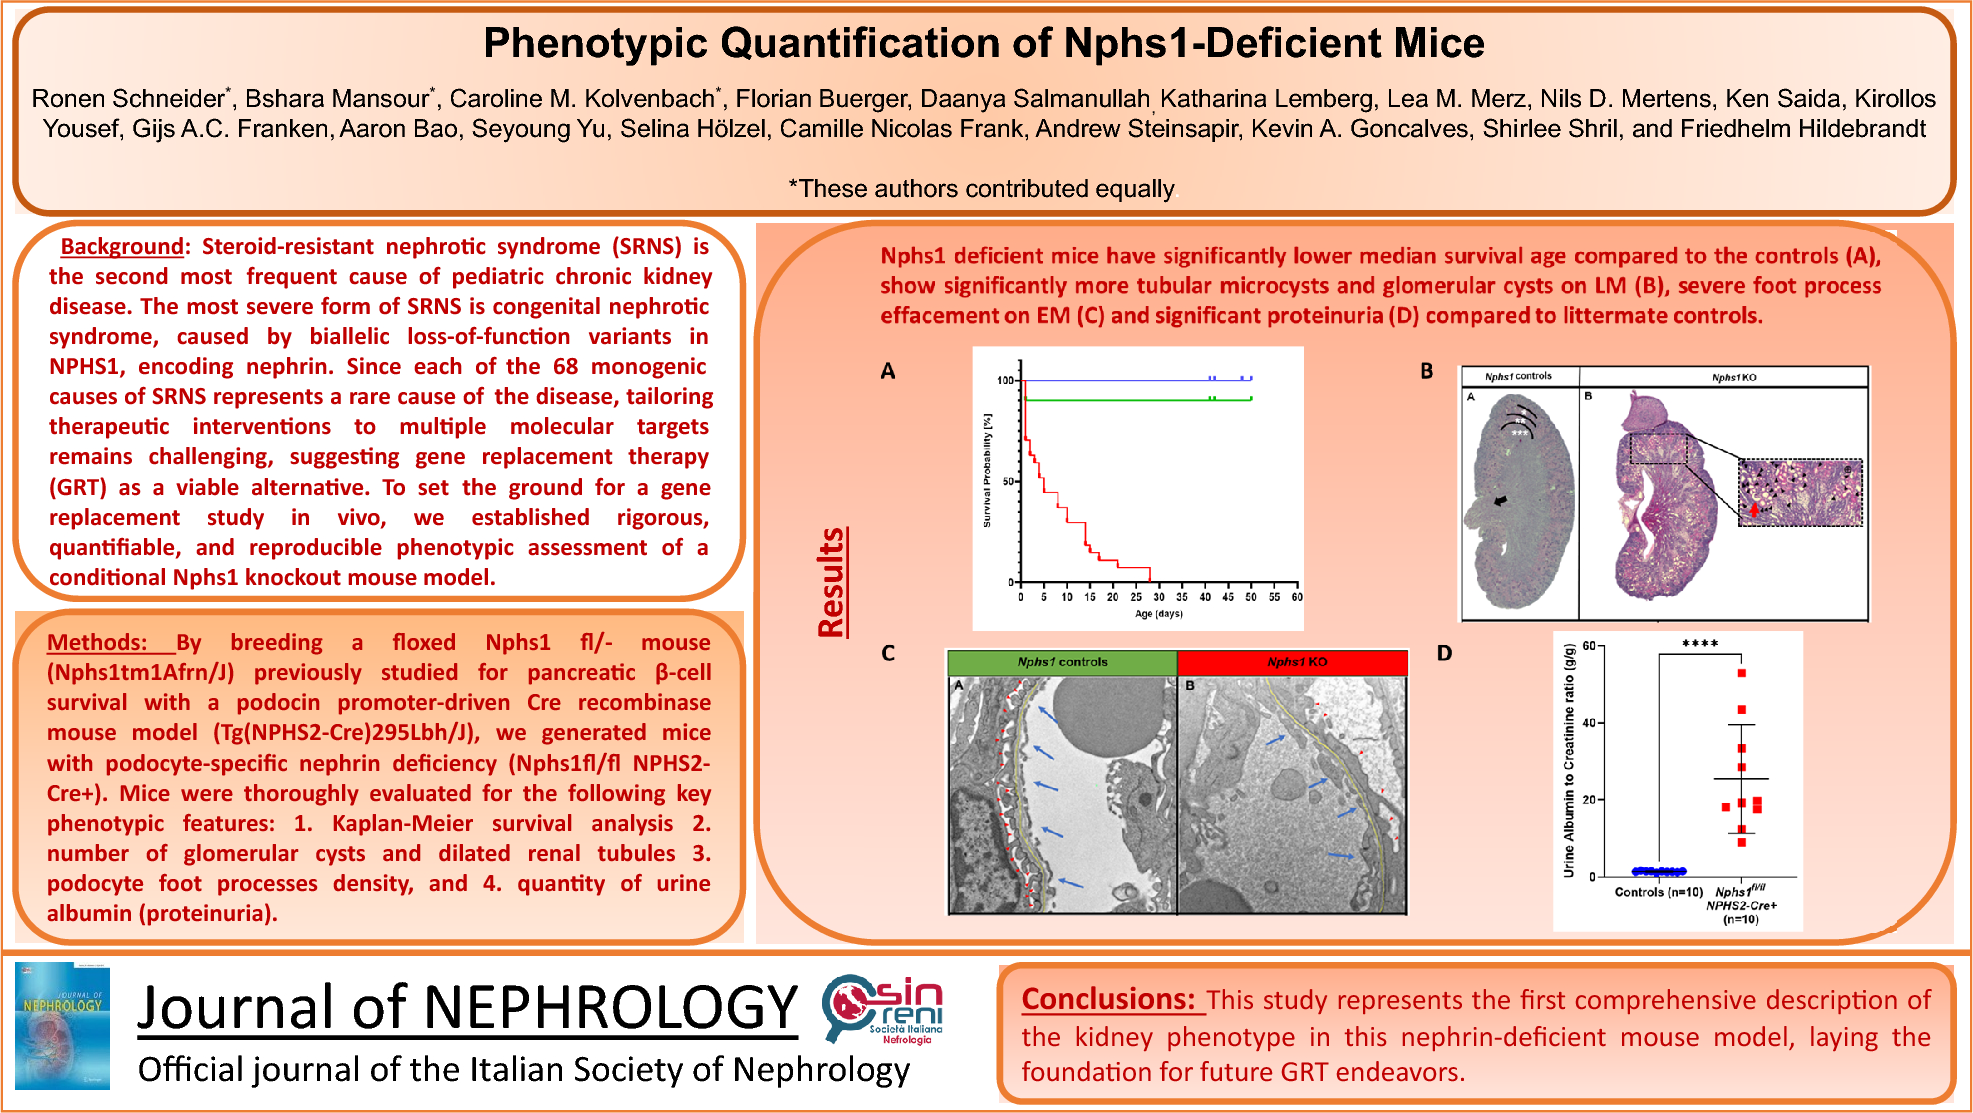 Phenotypic quantification of Nphs1-deficient mice